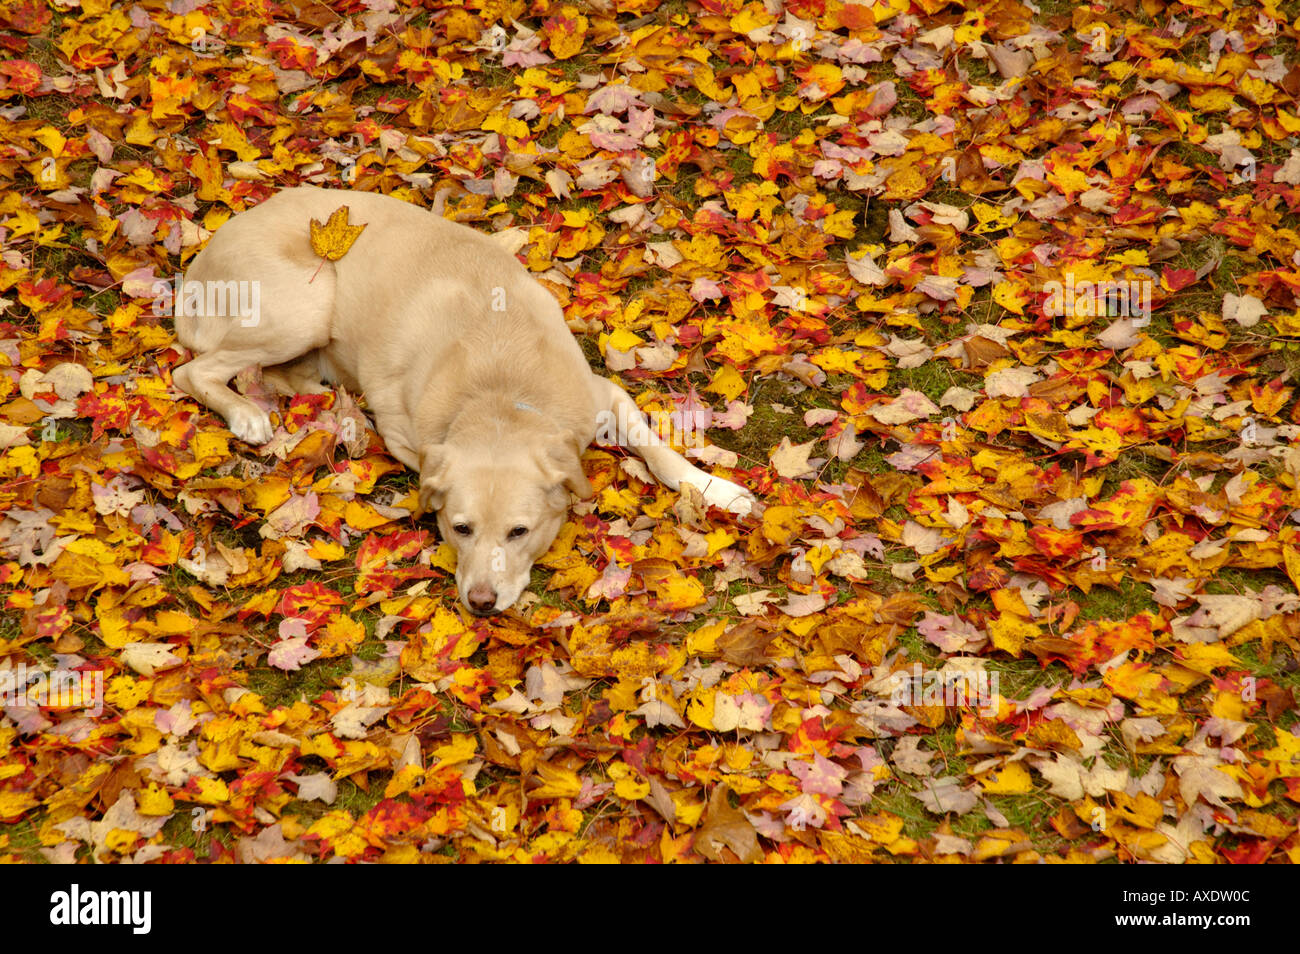 A yellow laborador retriever dog lies on an autumn leaf covered lawn. Stock Photo